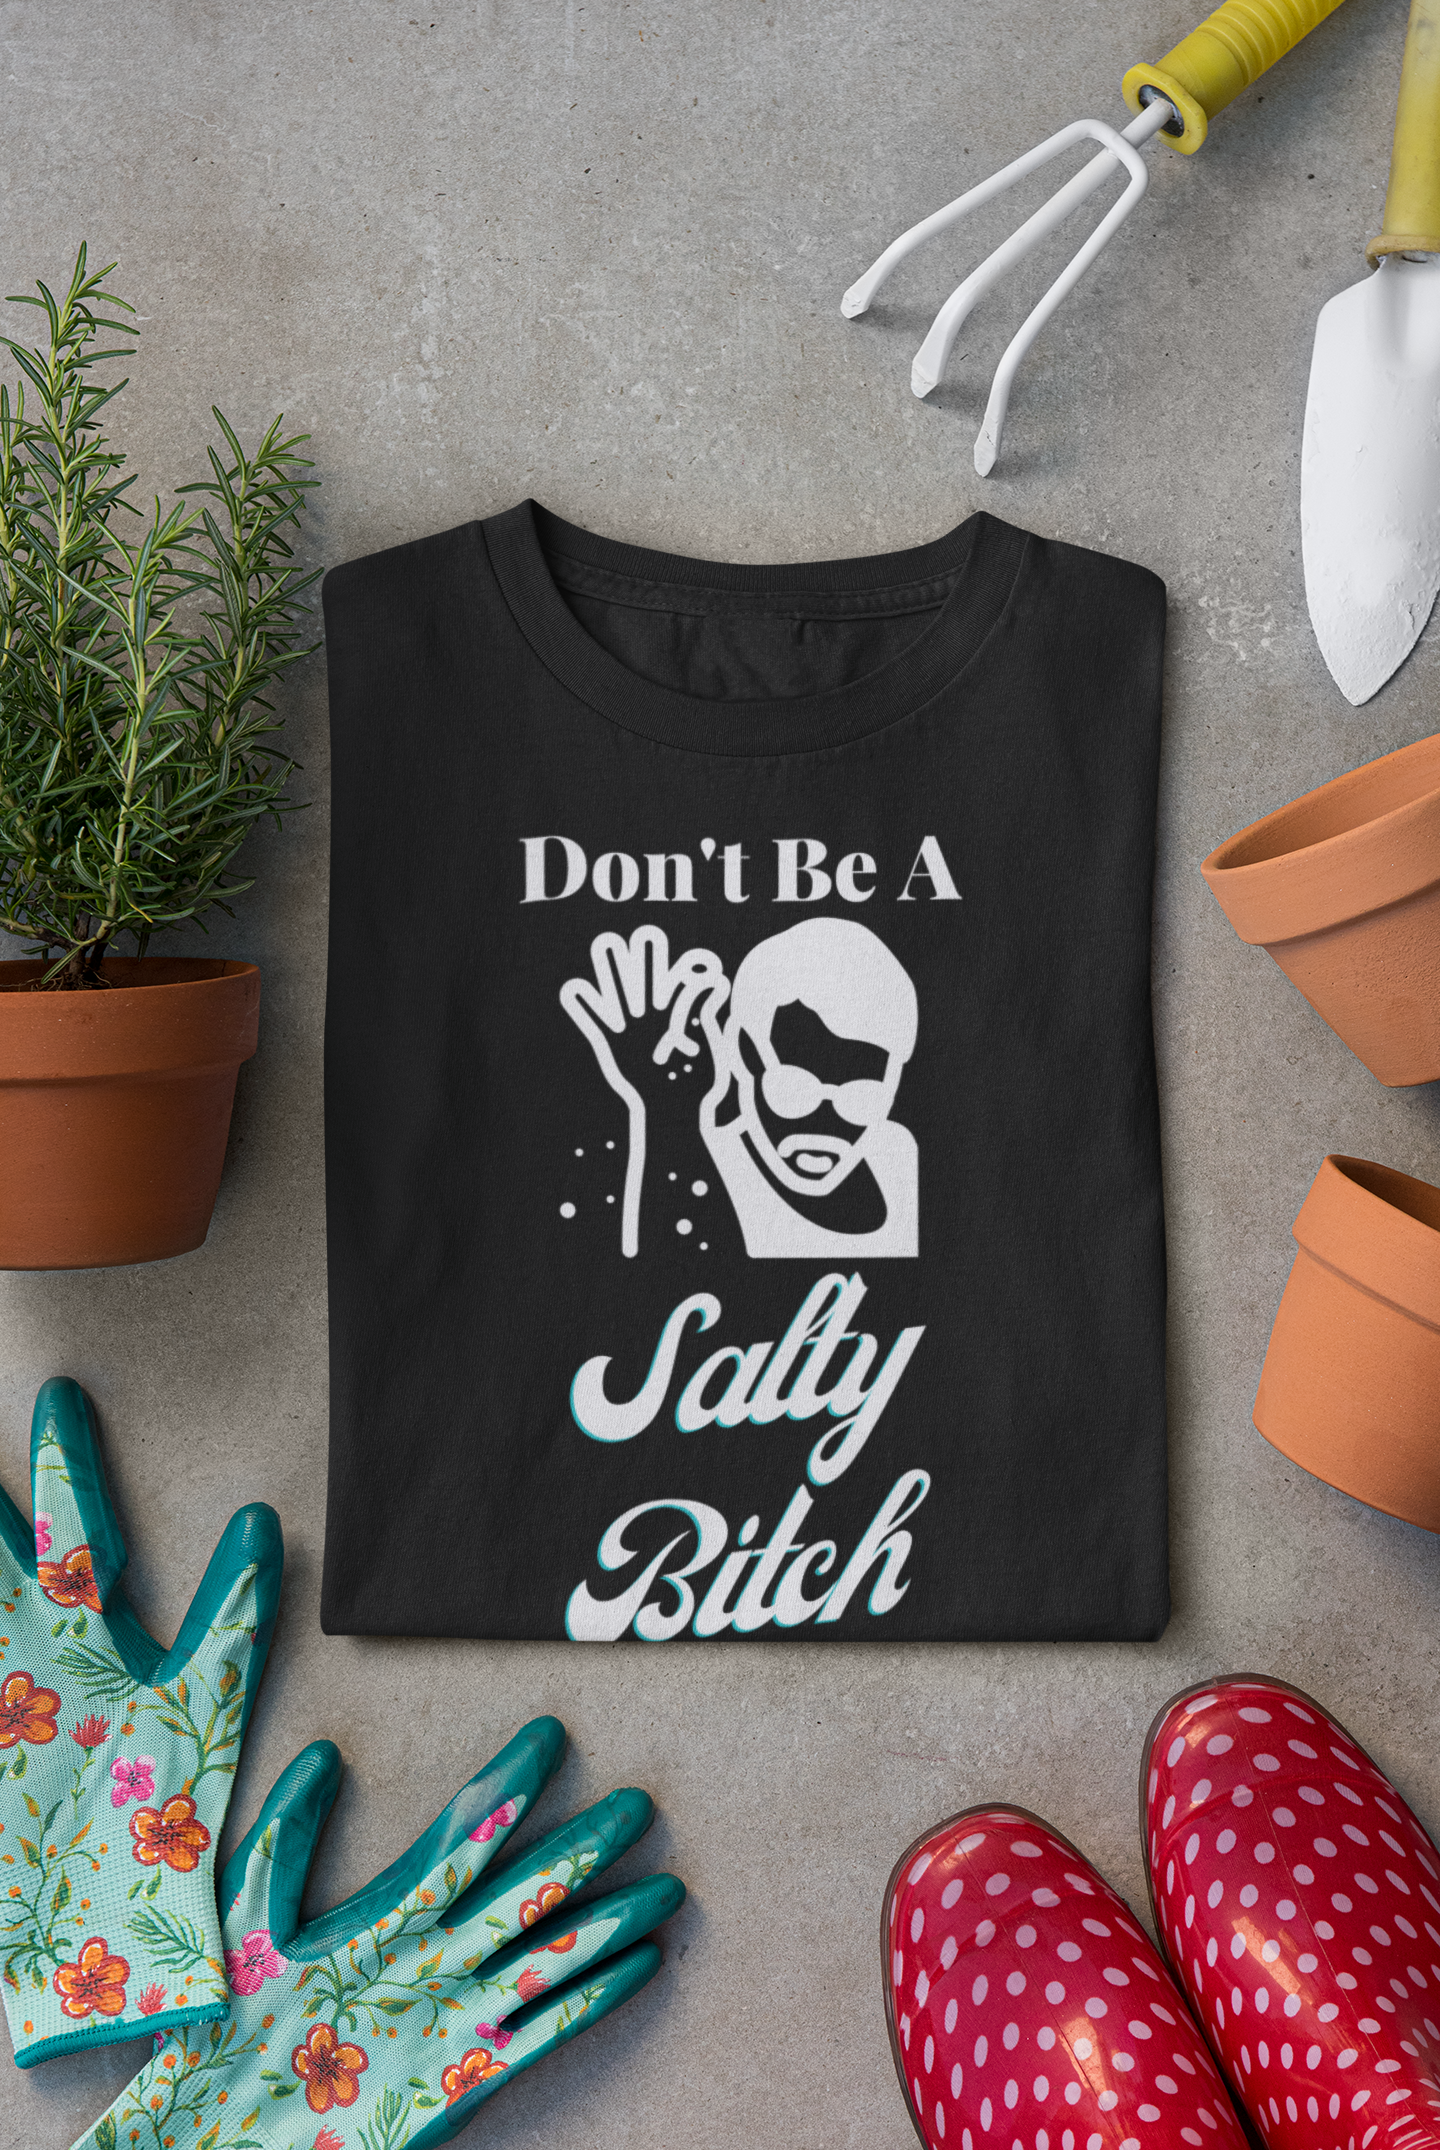 salty bitch-t shirt meme-funny joke shirts